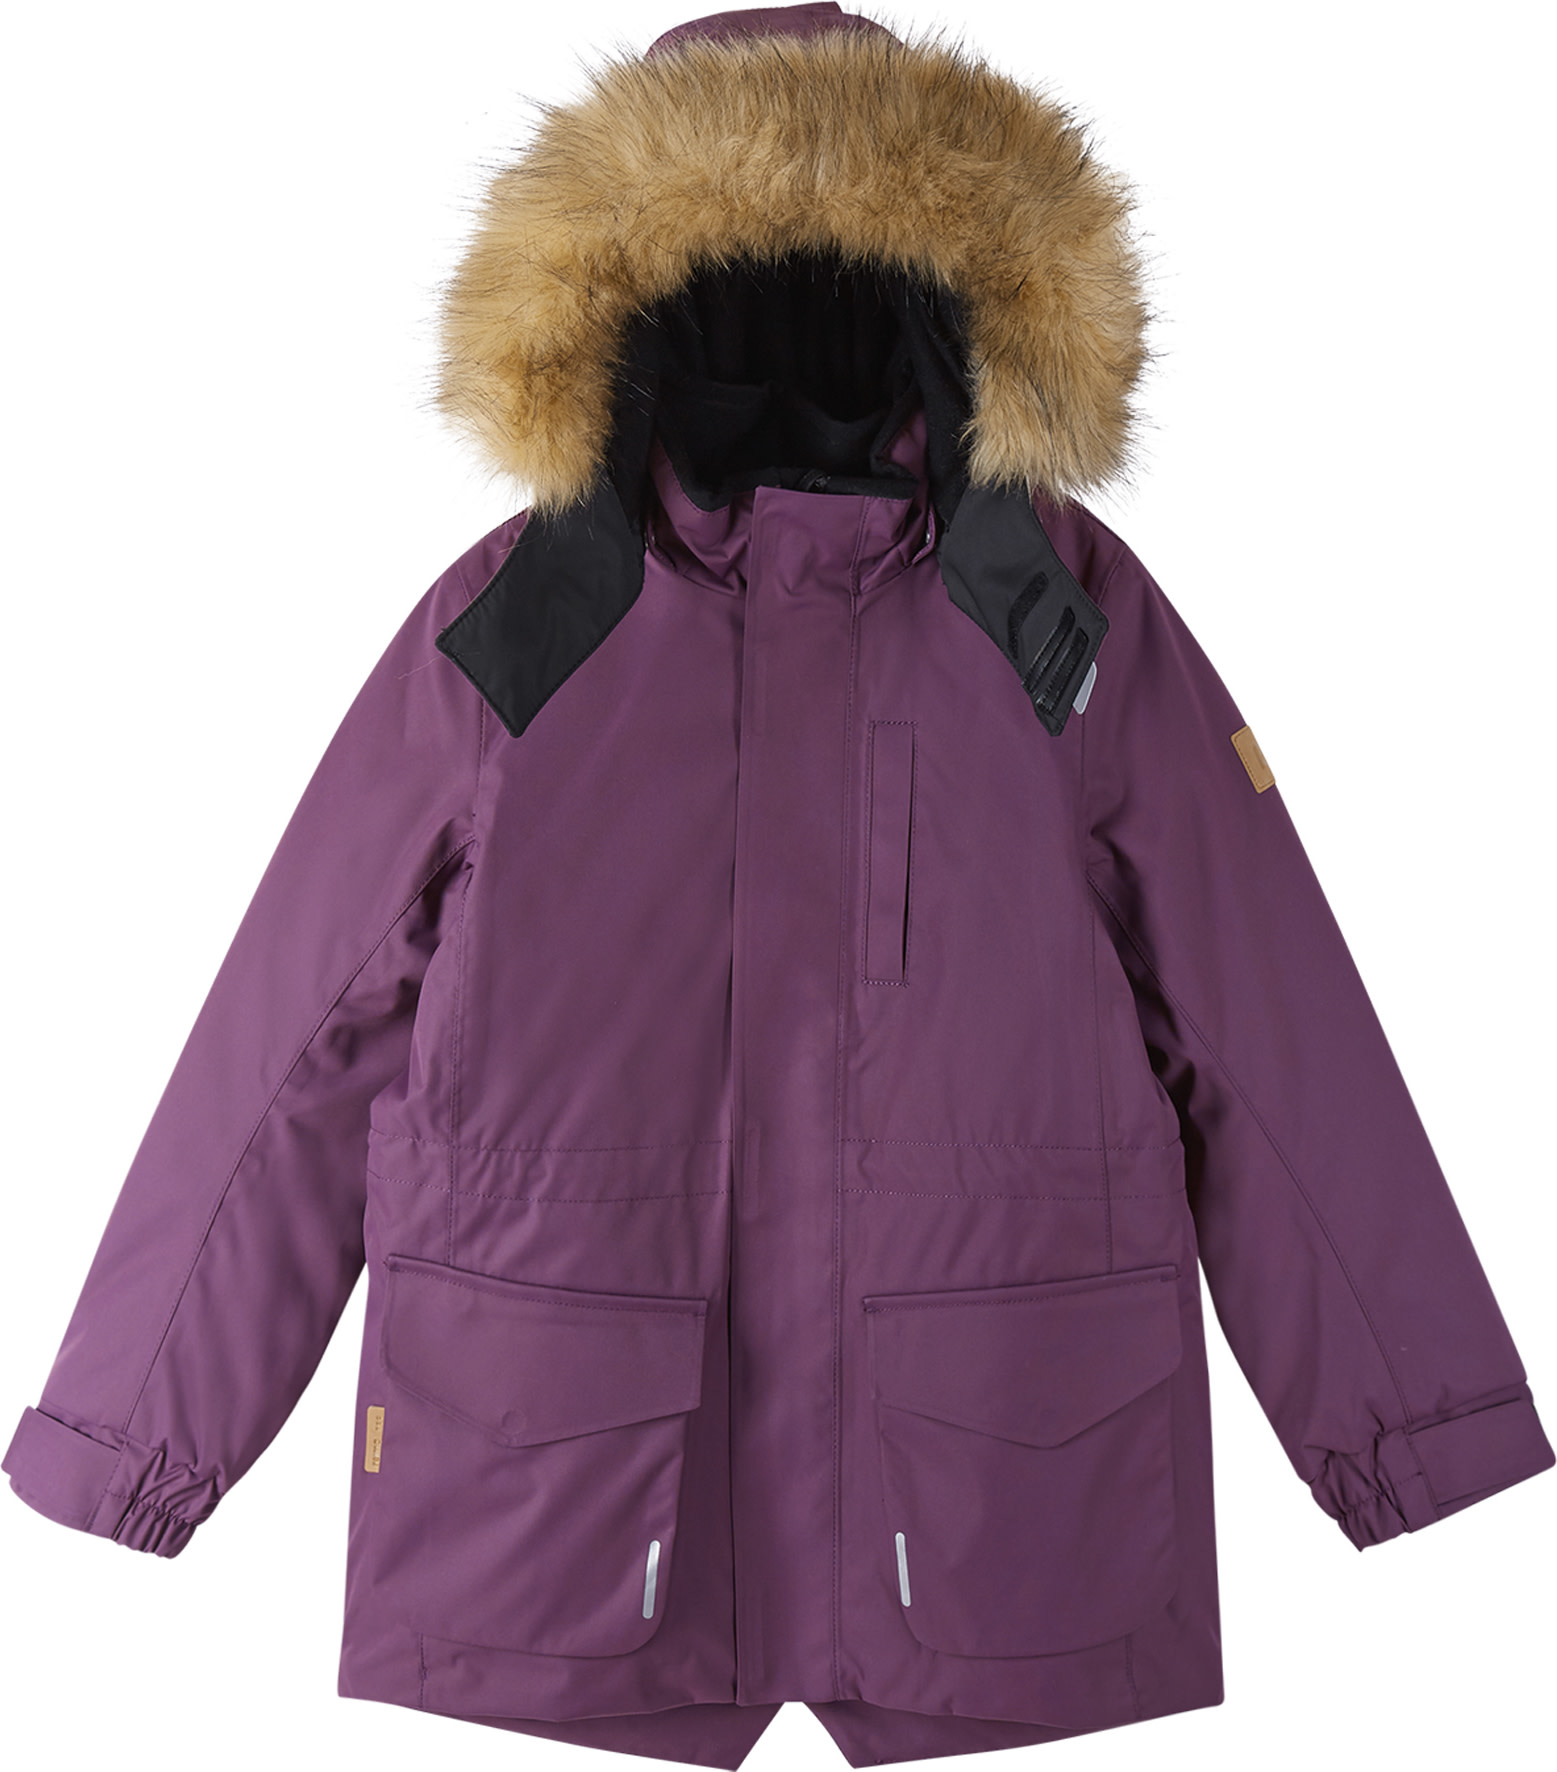 Kids’ Reimatec Winter Jacket Naapuri Deep purple 4960